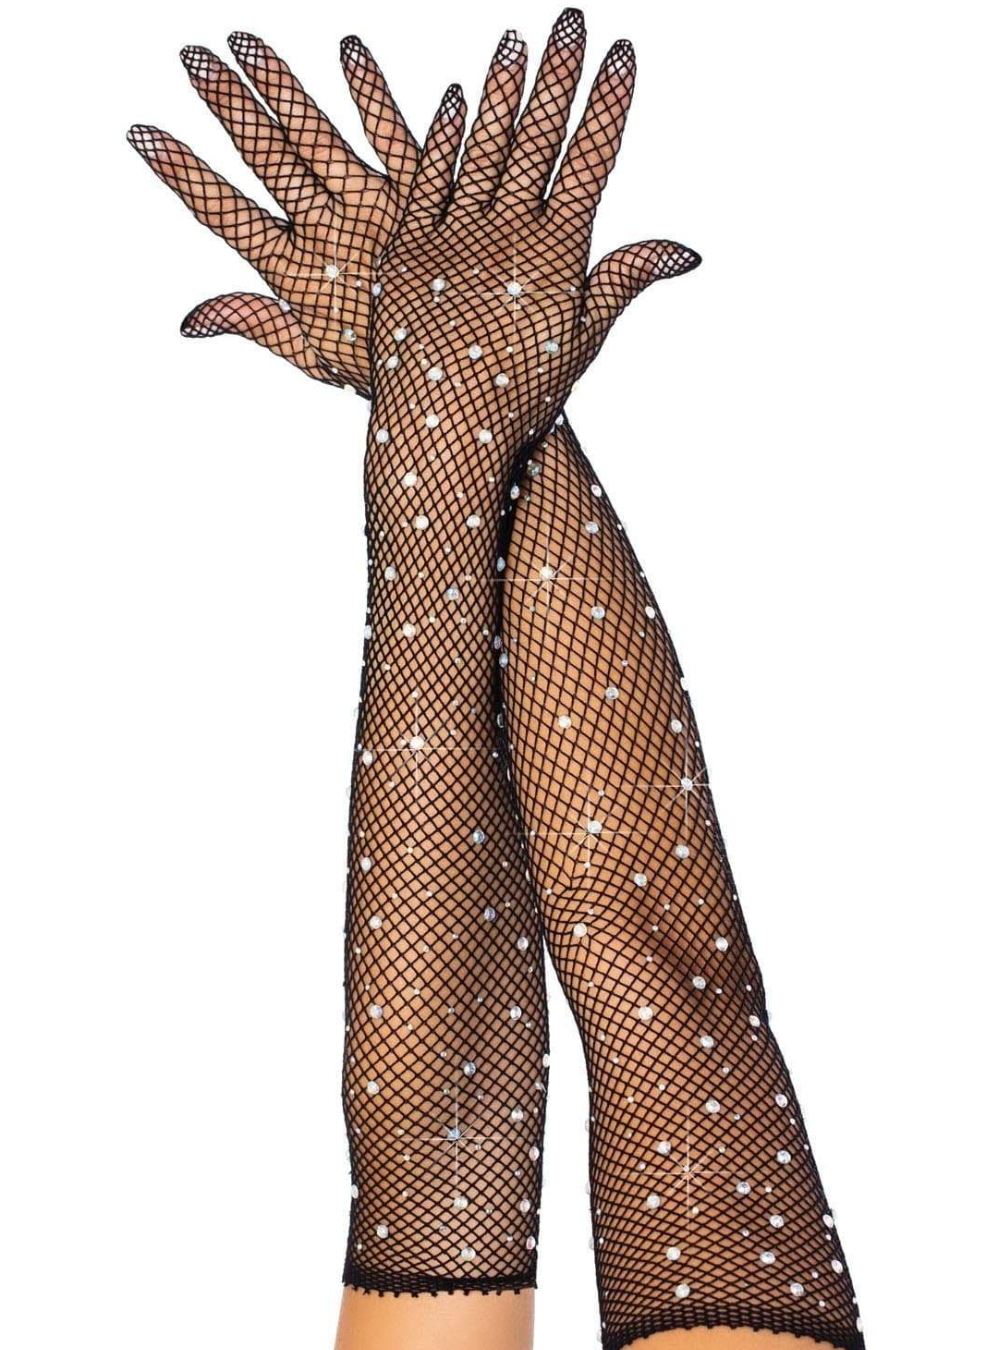 Rhinestone Fishnet Long Gloves